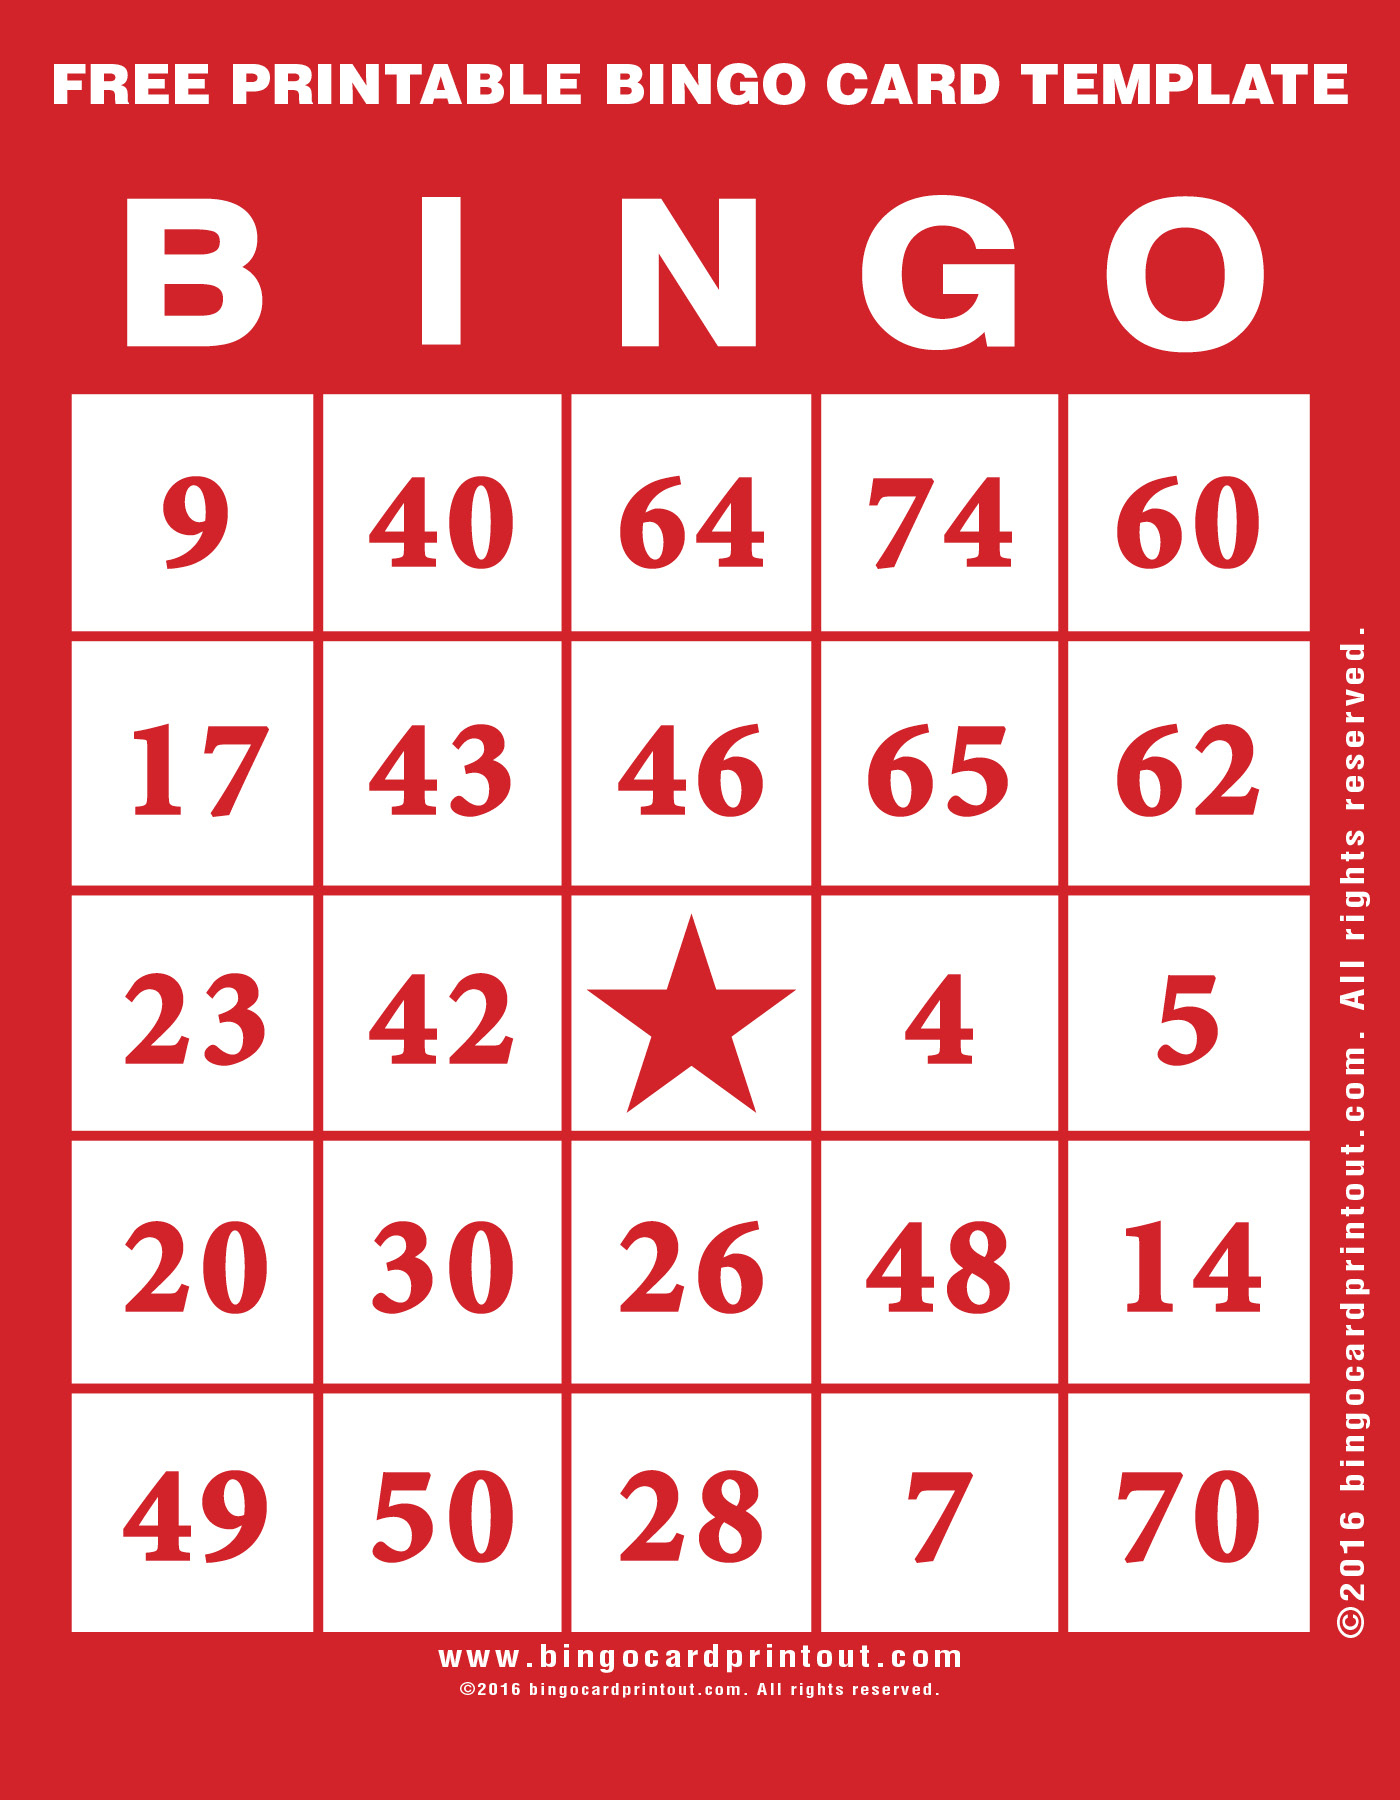 Free Printable Bingo Card Template - Bingocardprintout